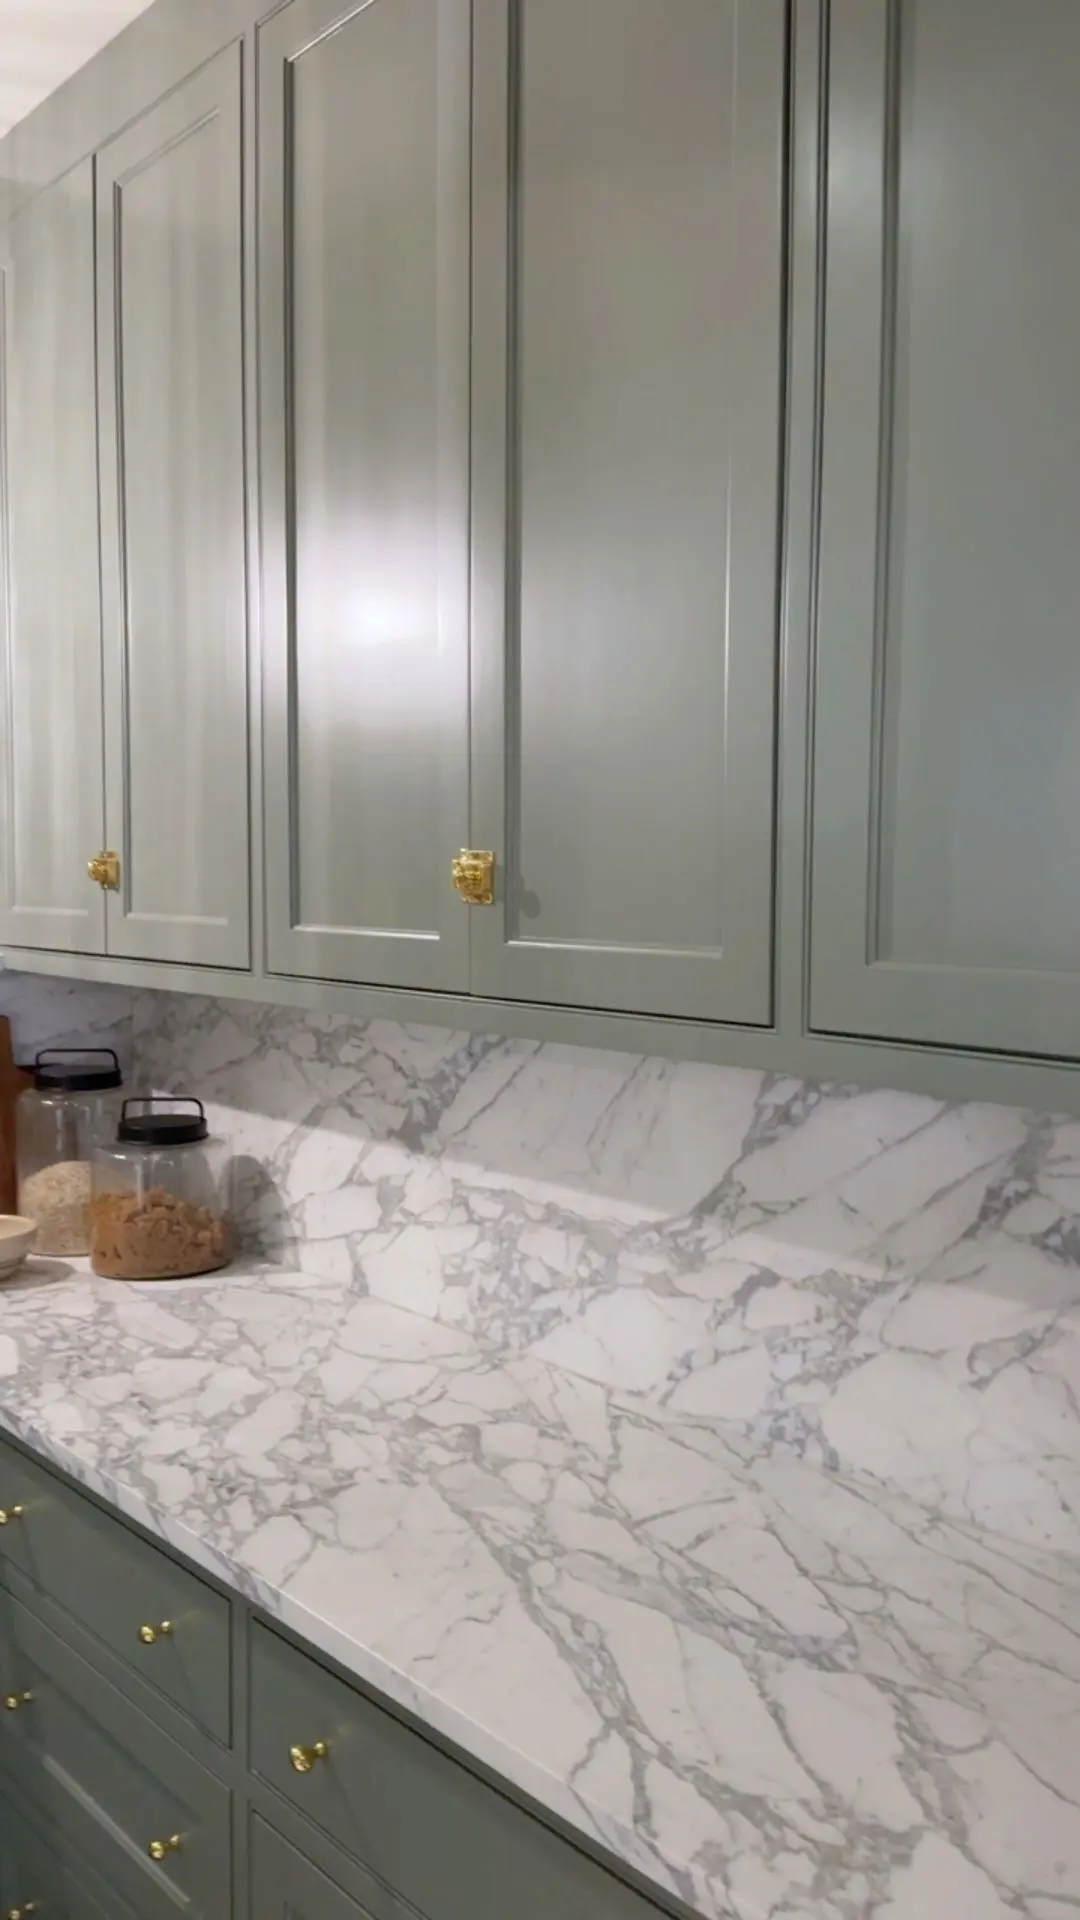 sage-green-kitchen-cabinets-marble-counter-backsplash-gold-cabinet-hardware